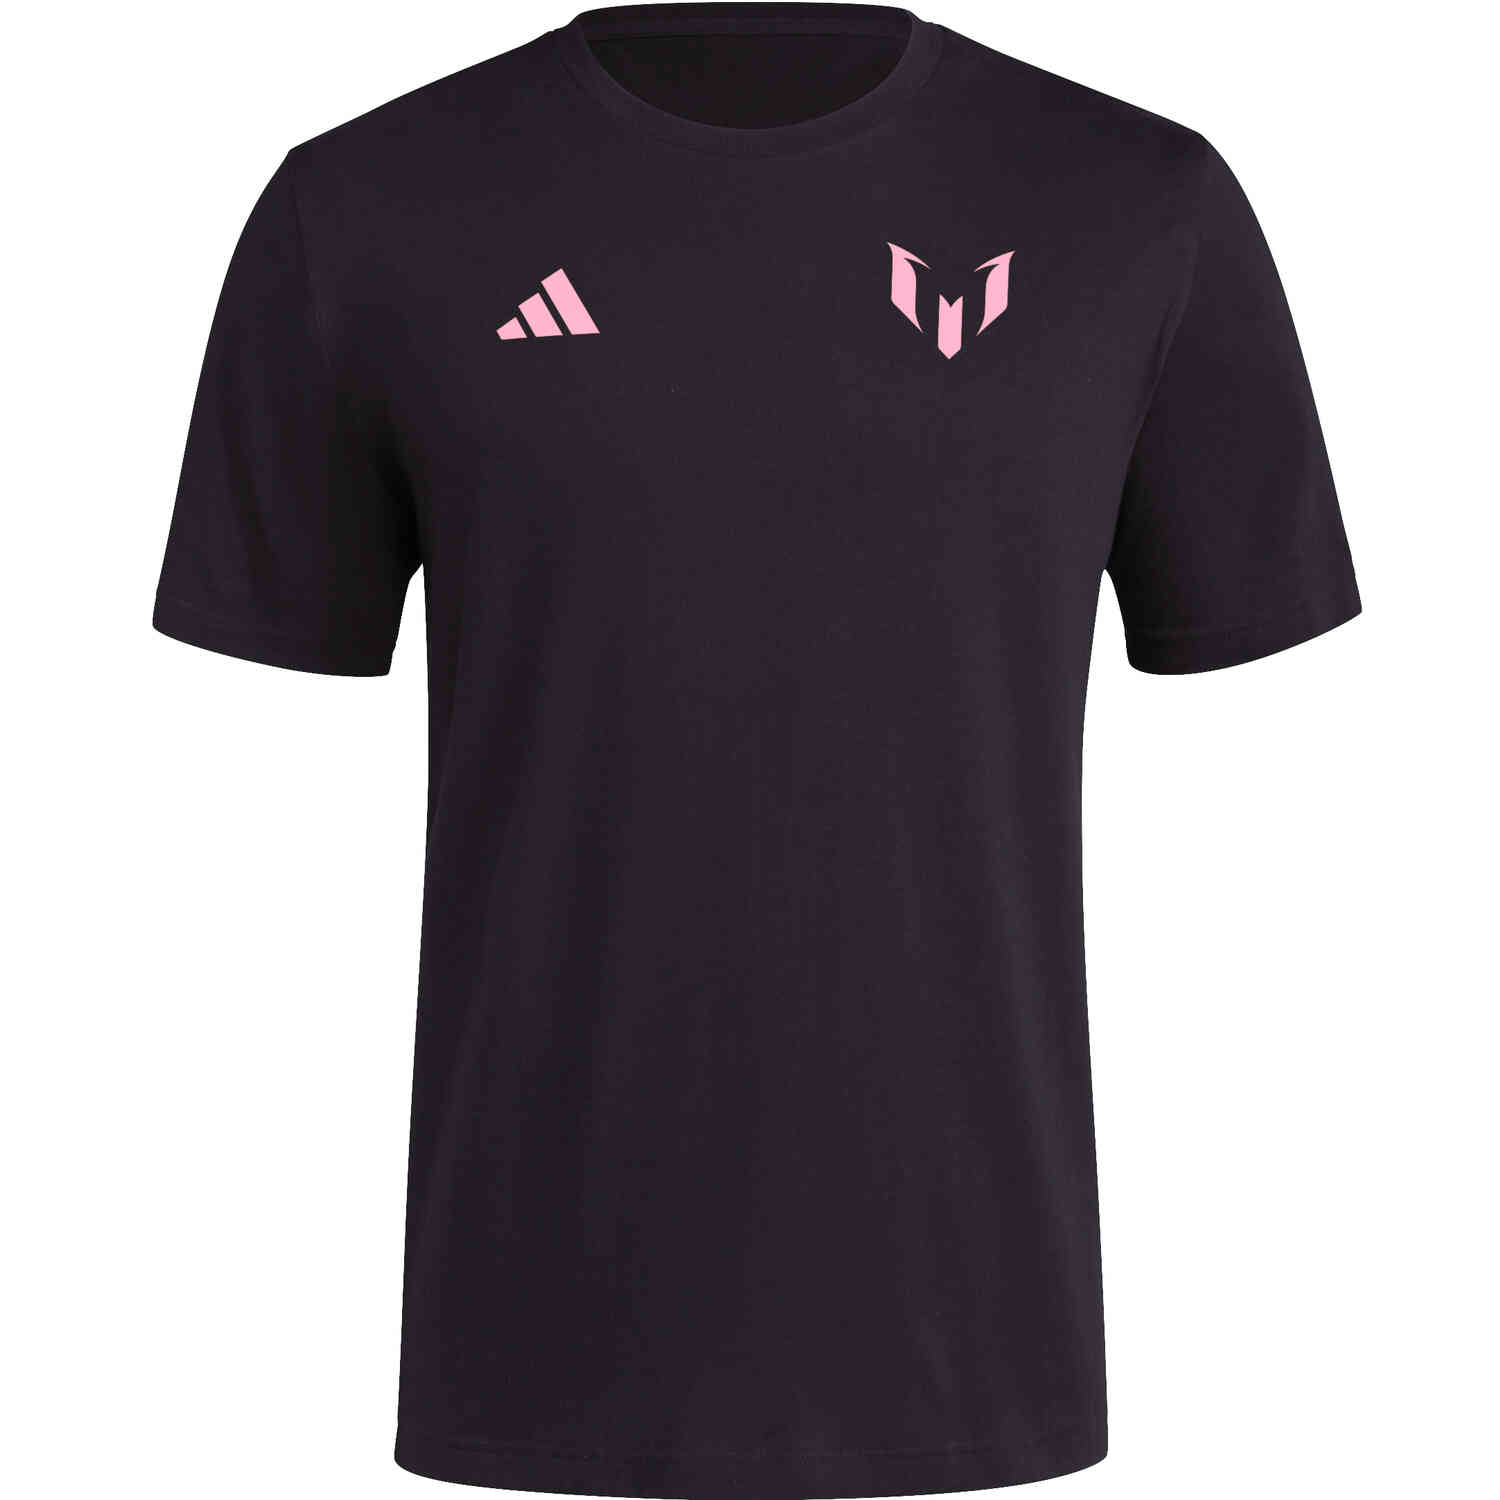 Adidas Messi T-shirt - Black - SoccerPro